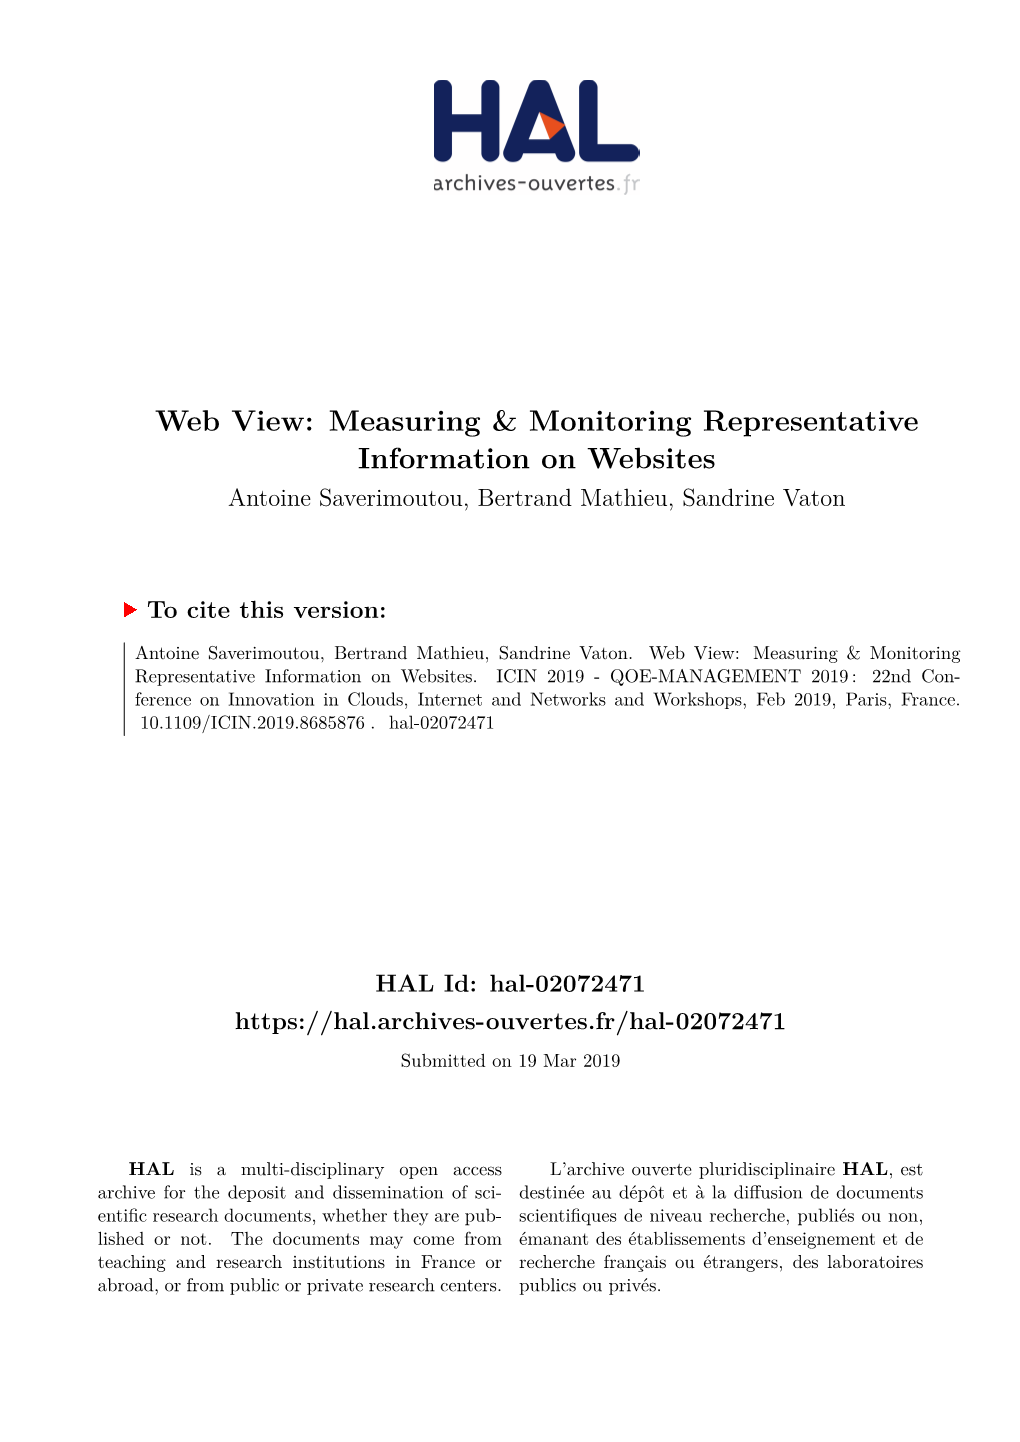 Web View: Measuring & Monitoring Representative Information on Websites Antoine Saverimoutou, Bertrand Mathieu, Sandrine Vaton